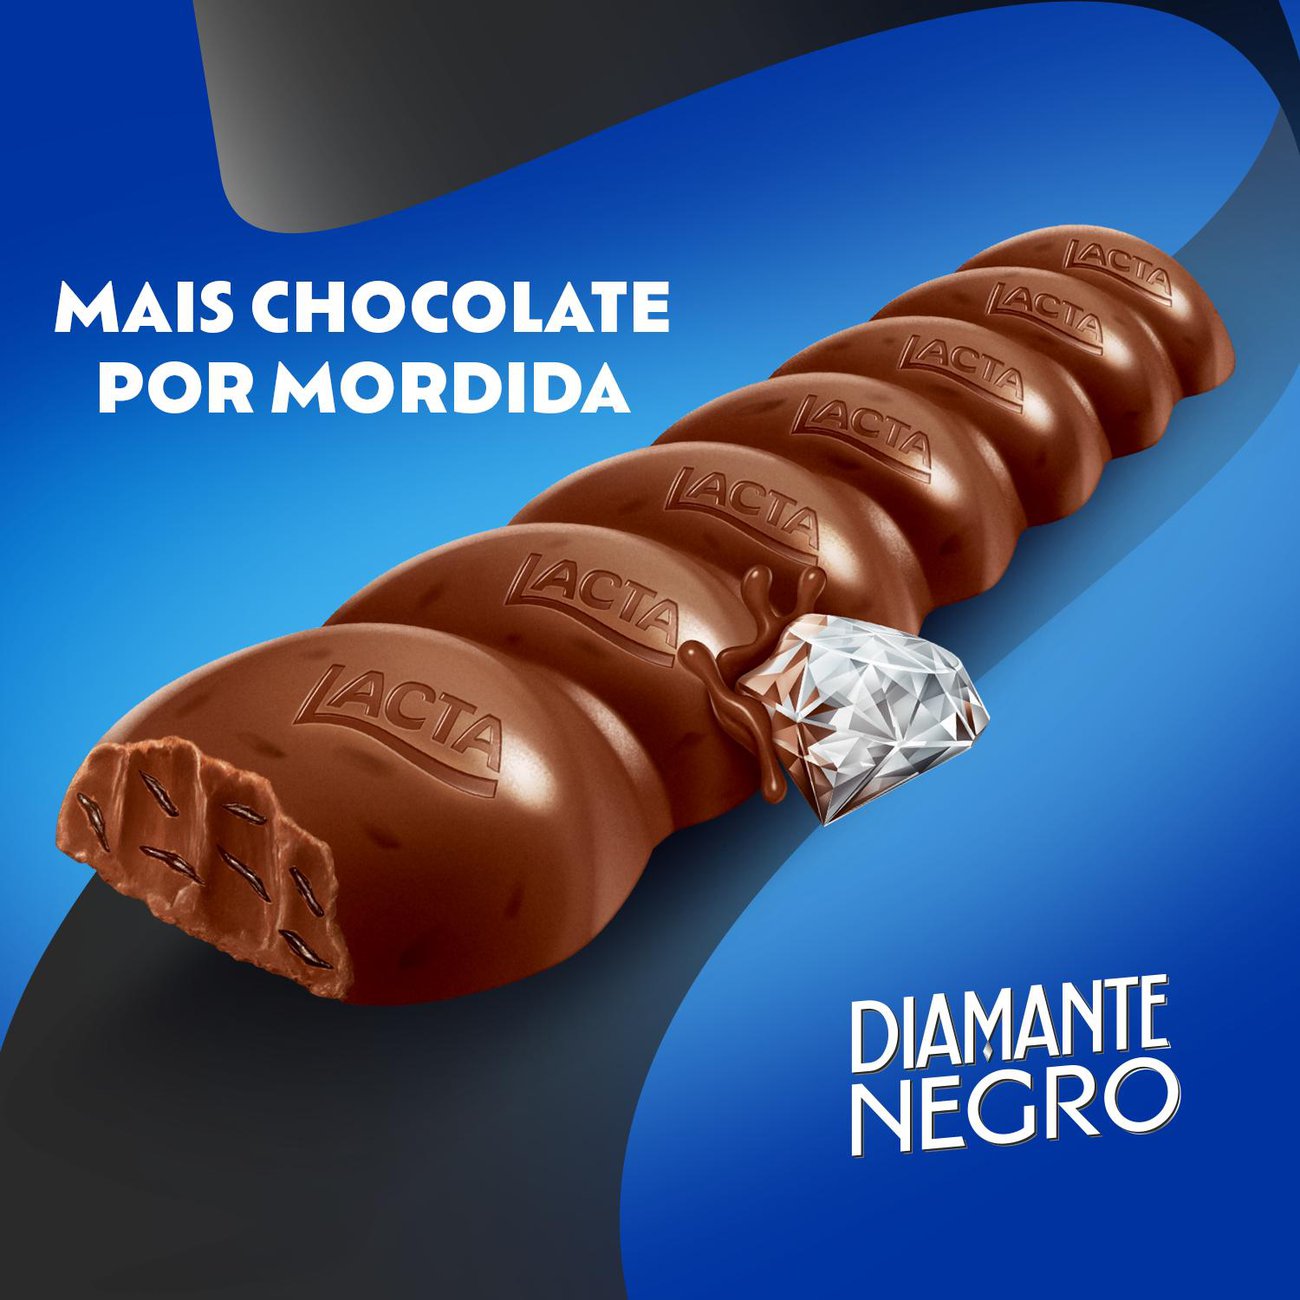 Barra de Chocolate Lacta Diamante Negro 34gr